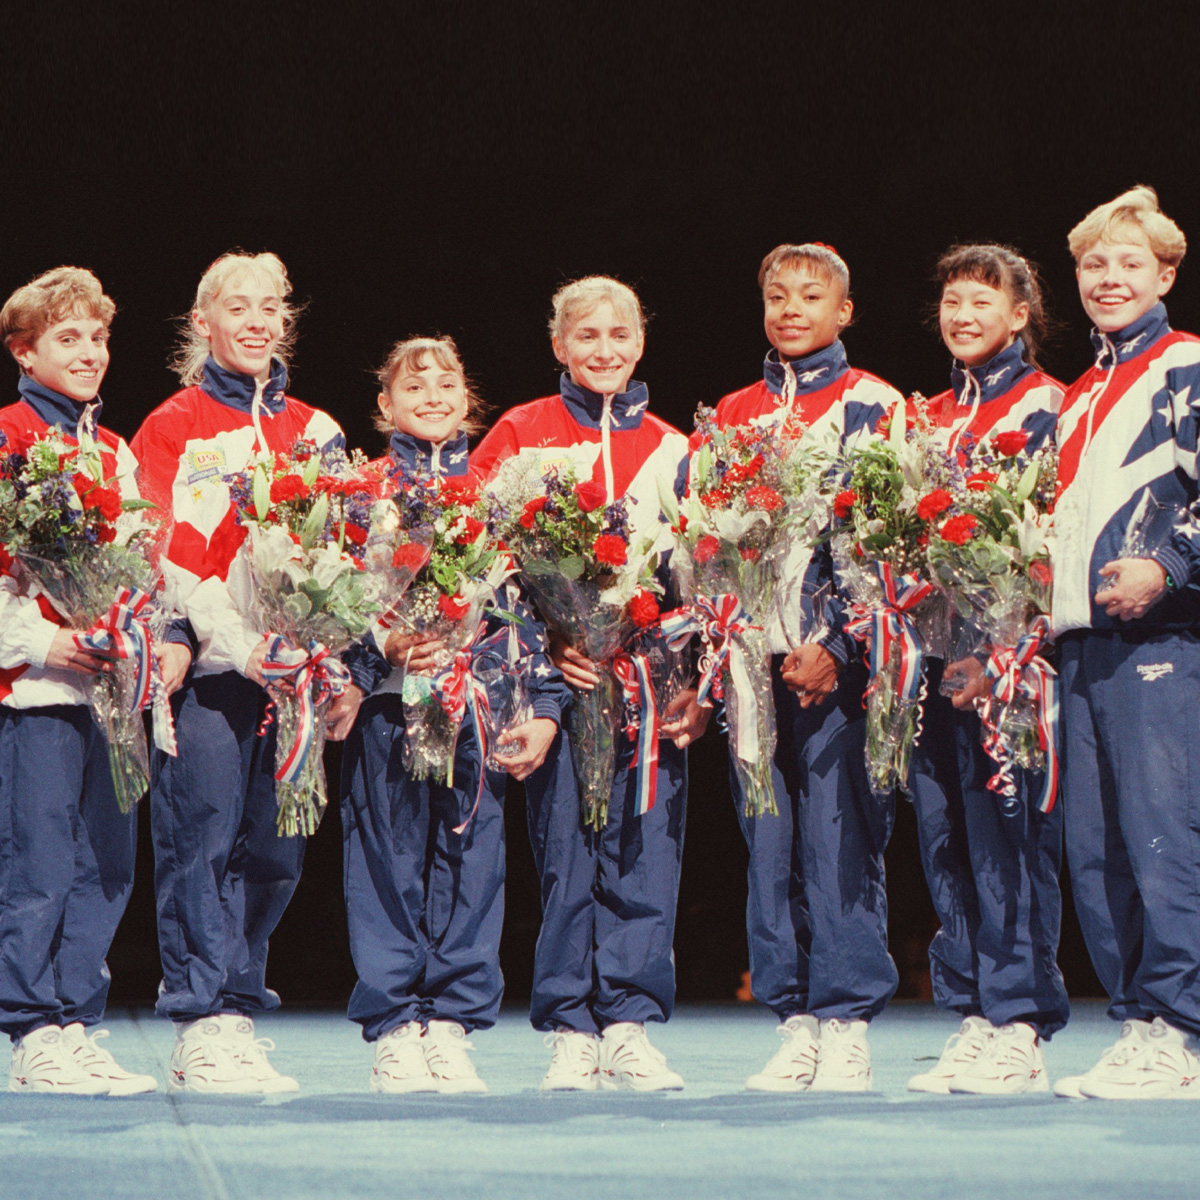 1996 Women's Olympic Team • USA Gymnastics